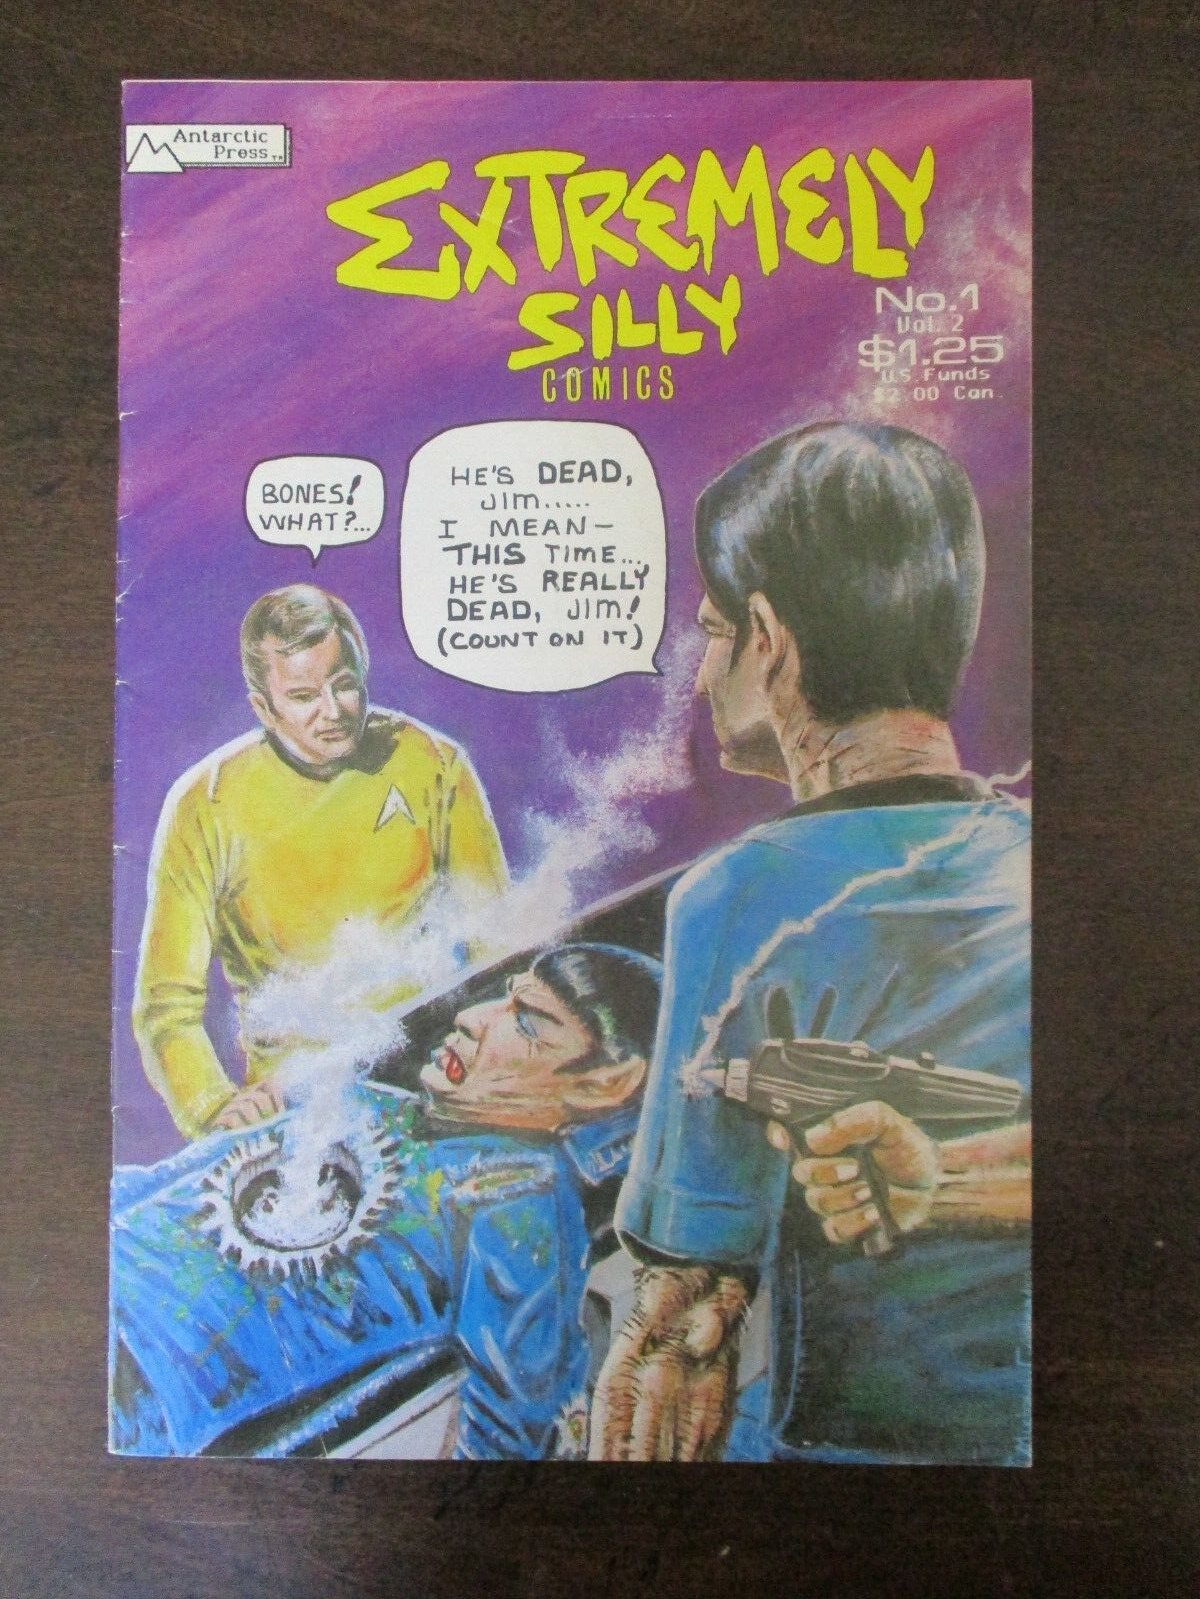 EXTREMELY SILLY COMICS VOL 2 #1 1986 FINE ANTARCTIC PRESS STAR TREK SPOCK KIRK